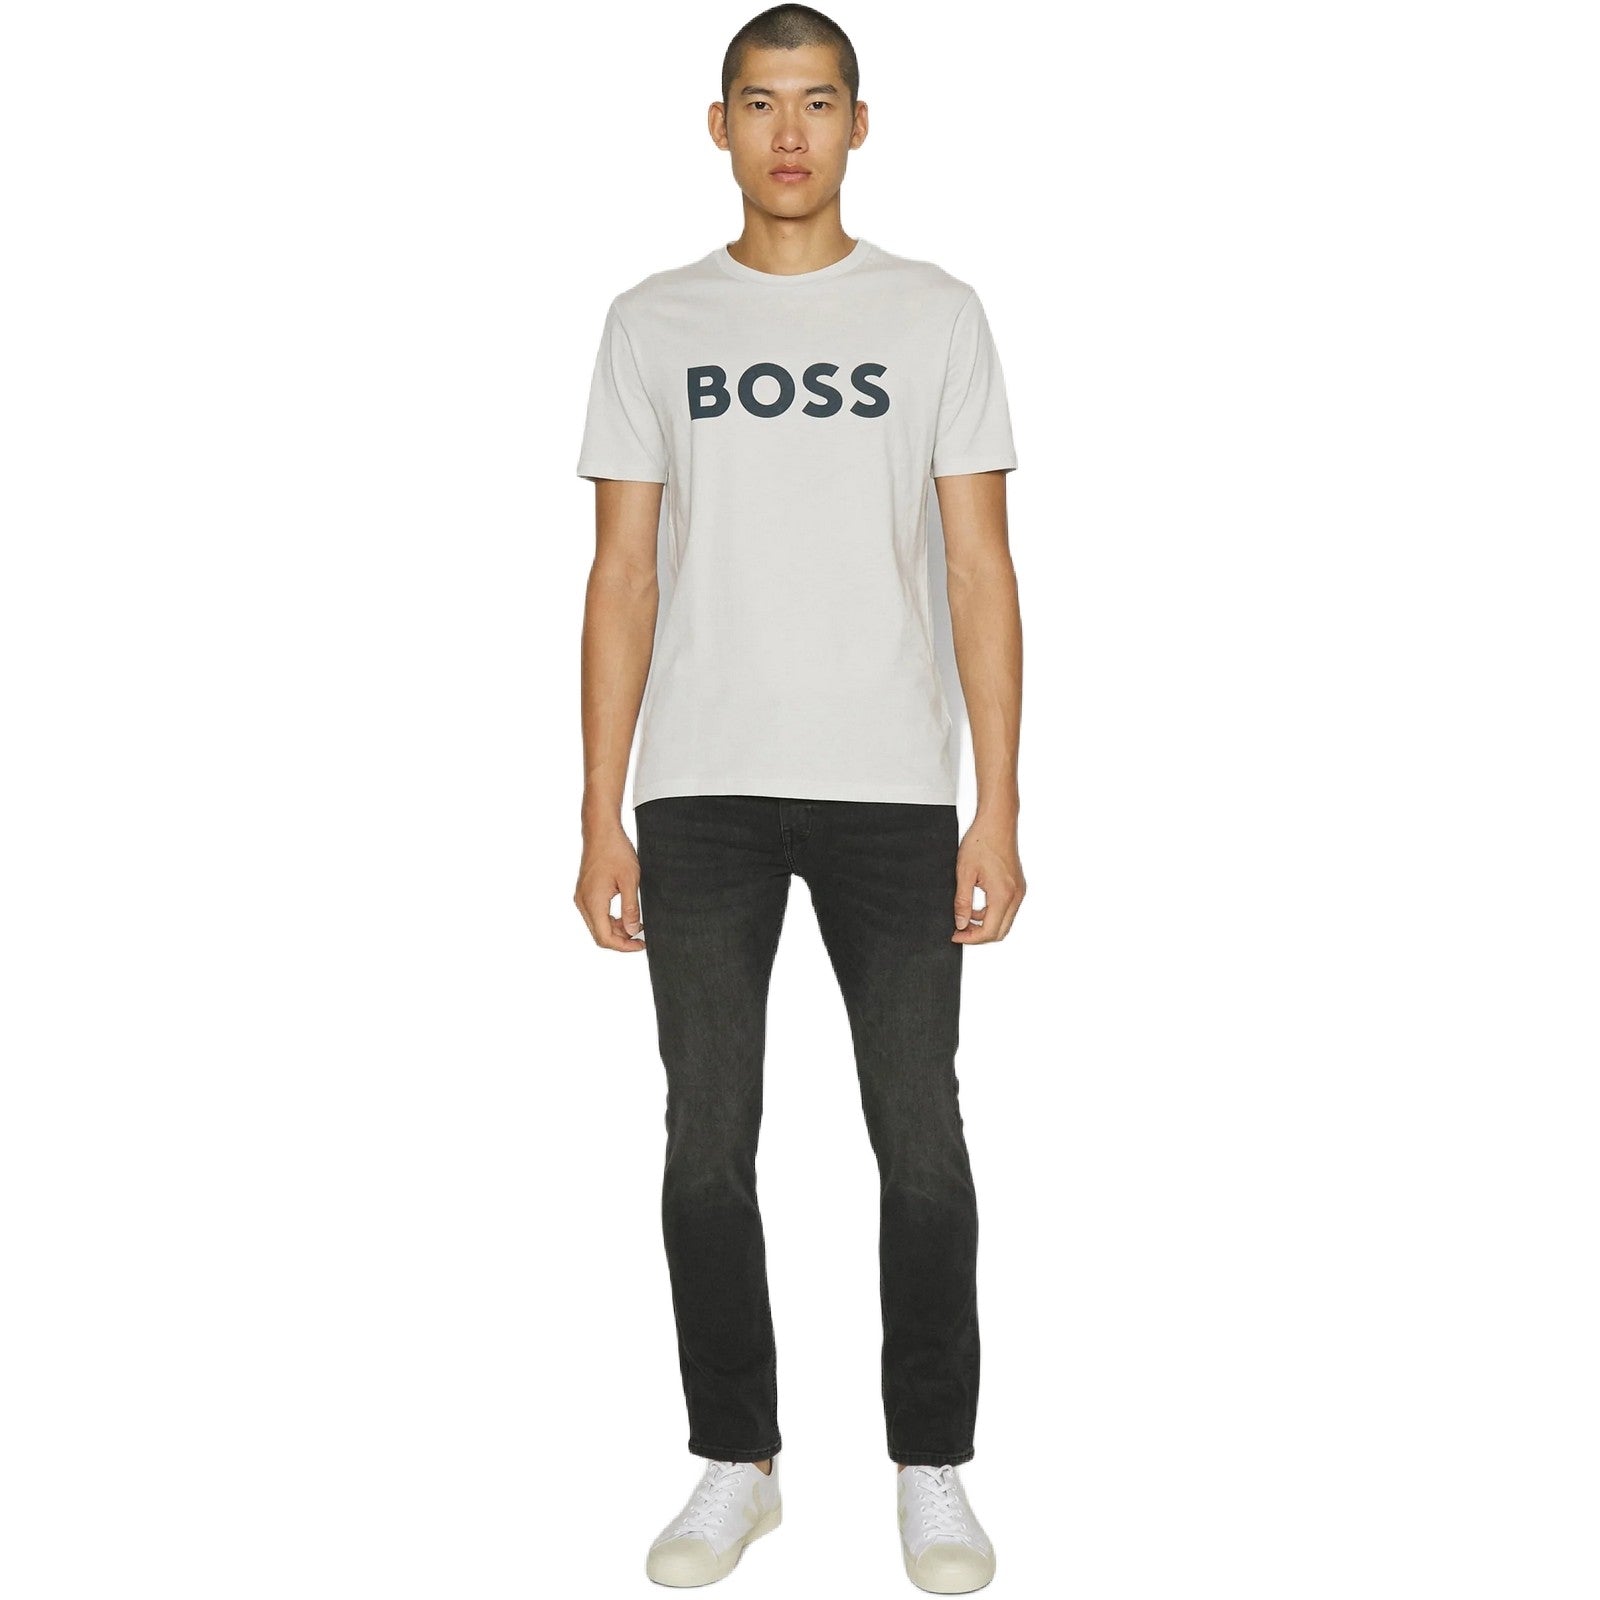 T-shirt Uomo Hugo Boss - Thinking 1 10246016 01 - Bianco